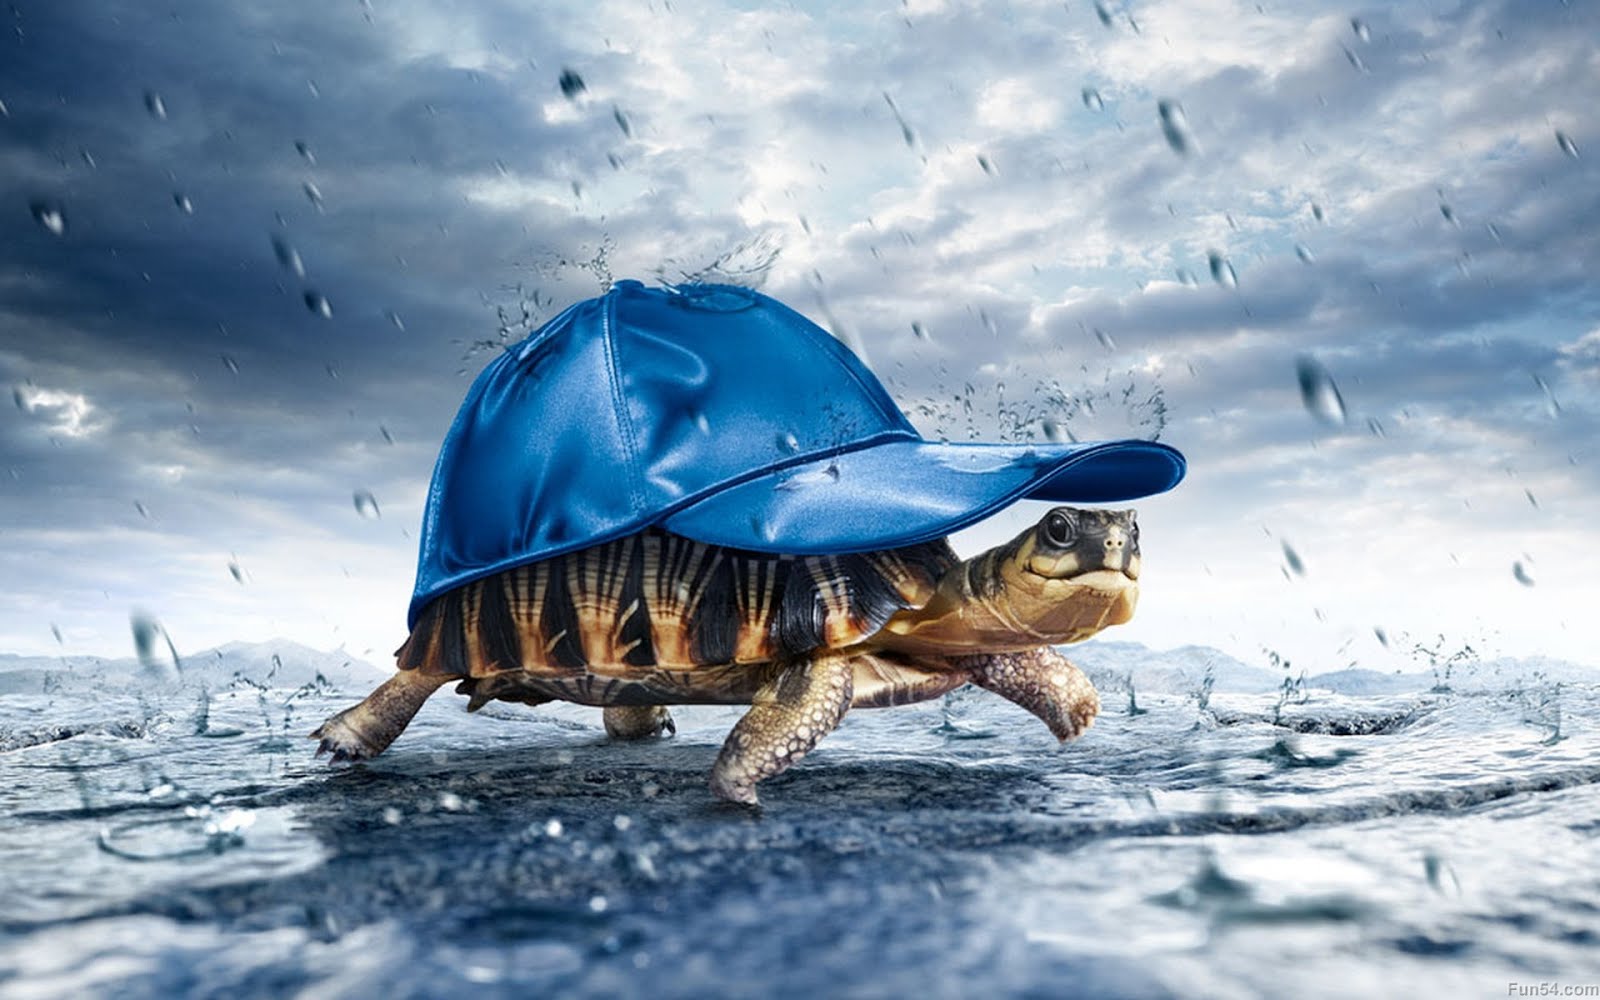 The Art of Beautiful Multi Color Tortoise Wearing Blue Cap